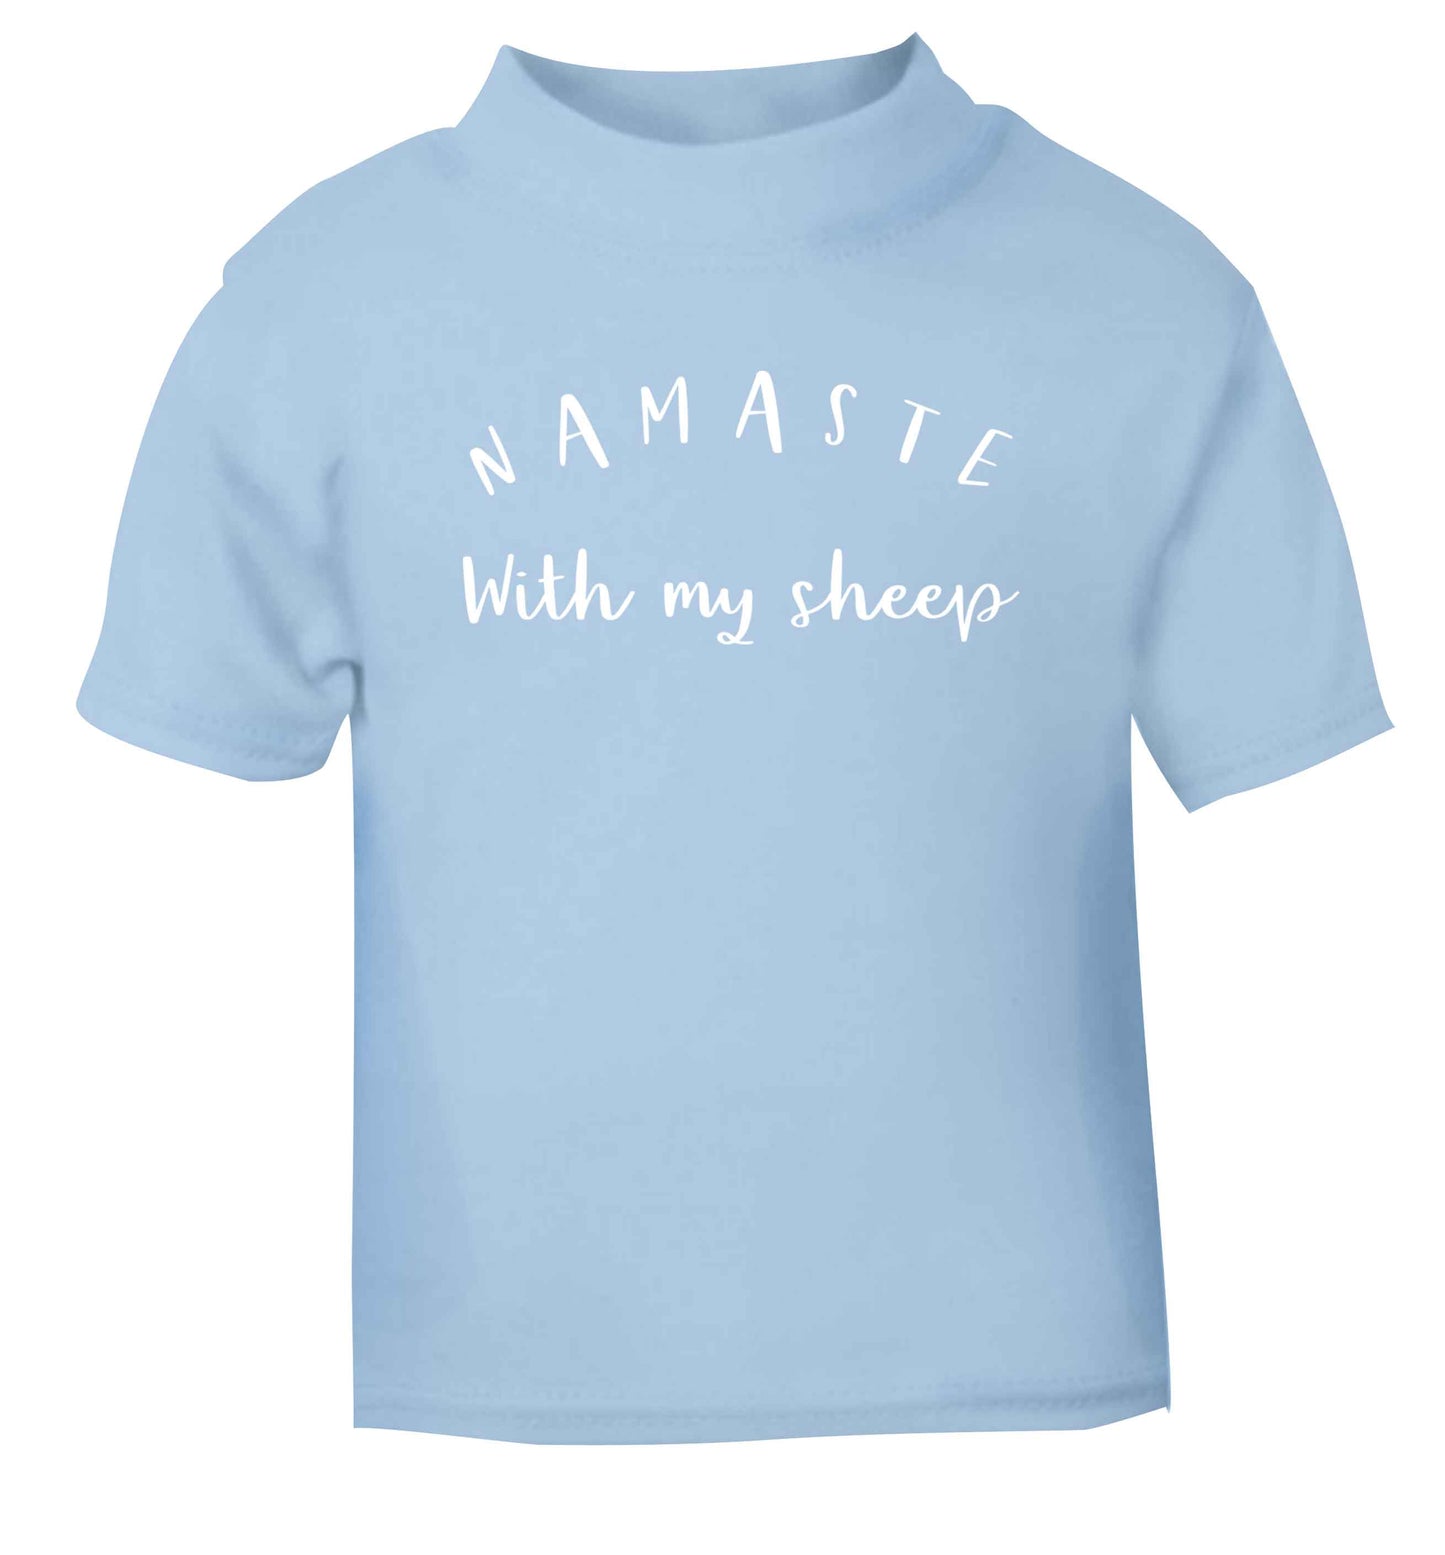 Namaste with my sheep light blue Baby Toddler Tshirt 2 Years